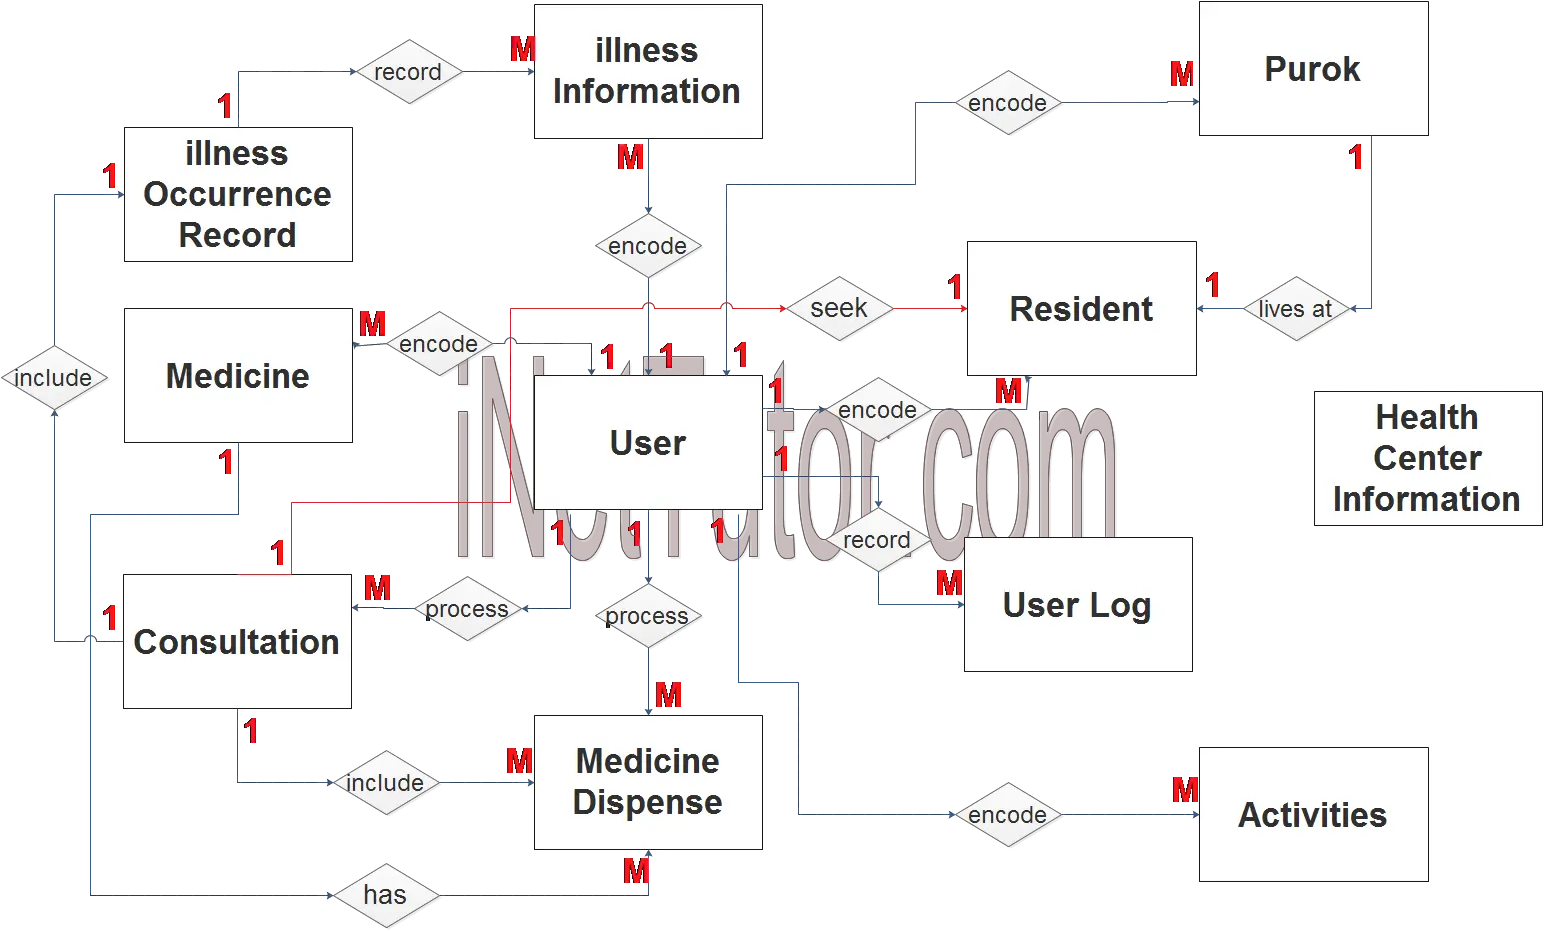 Health Center Patient Information System ER Diagram - Step 2 Table Relationship